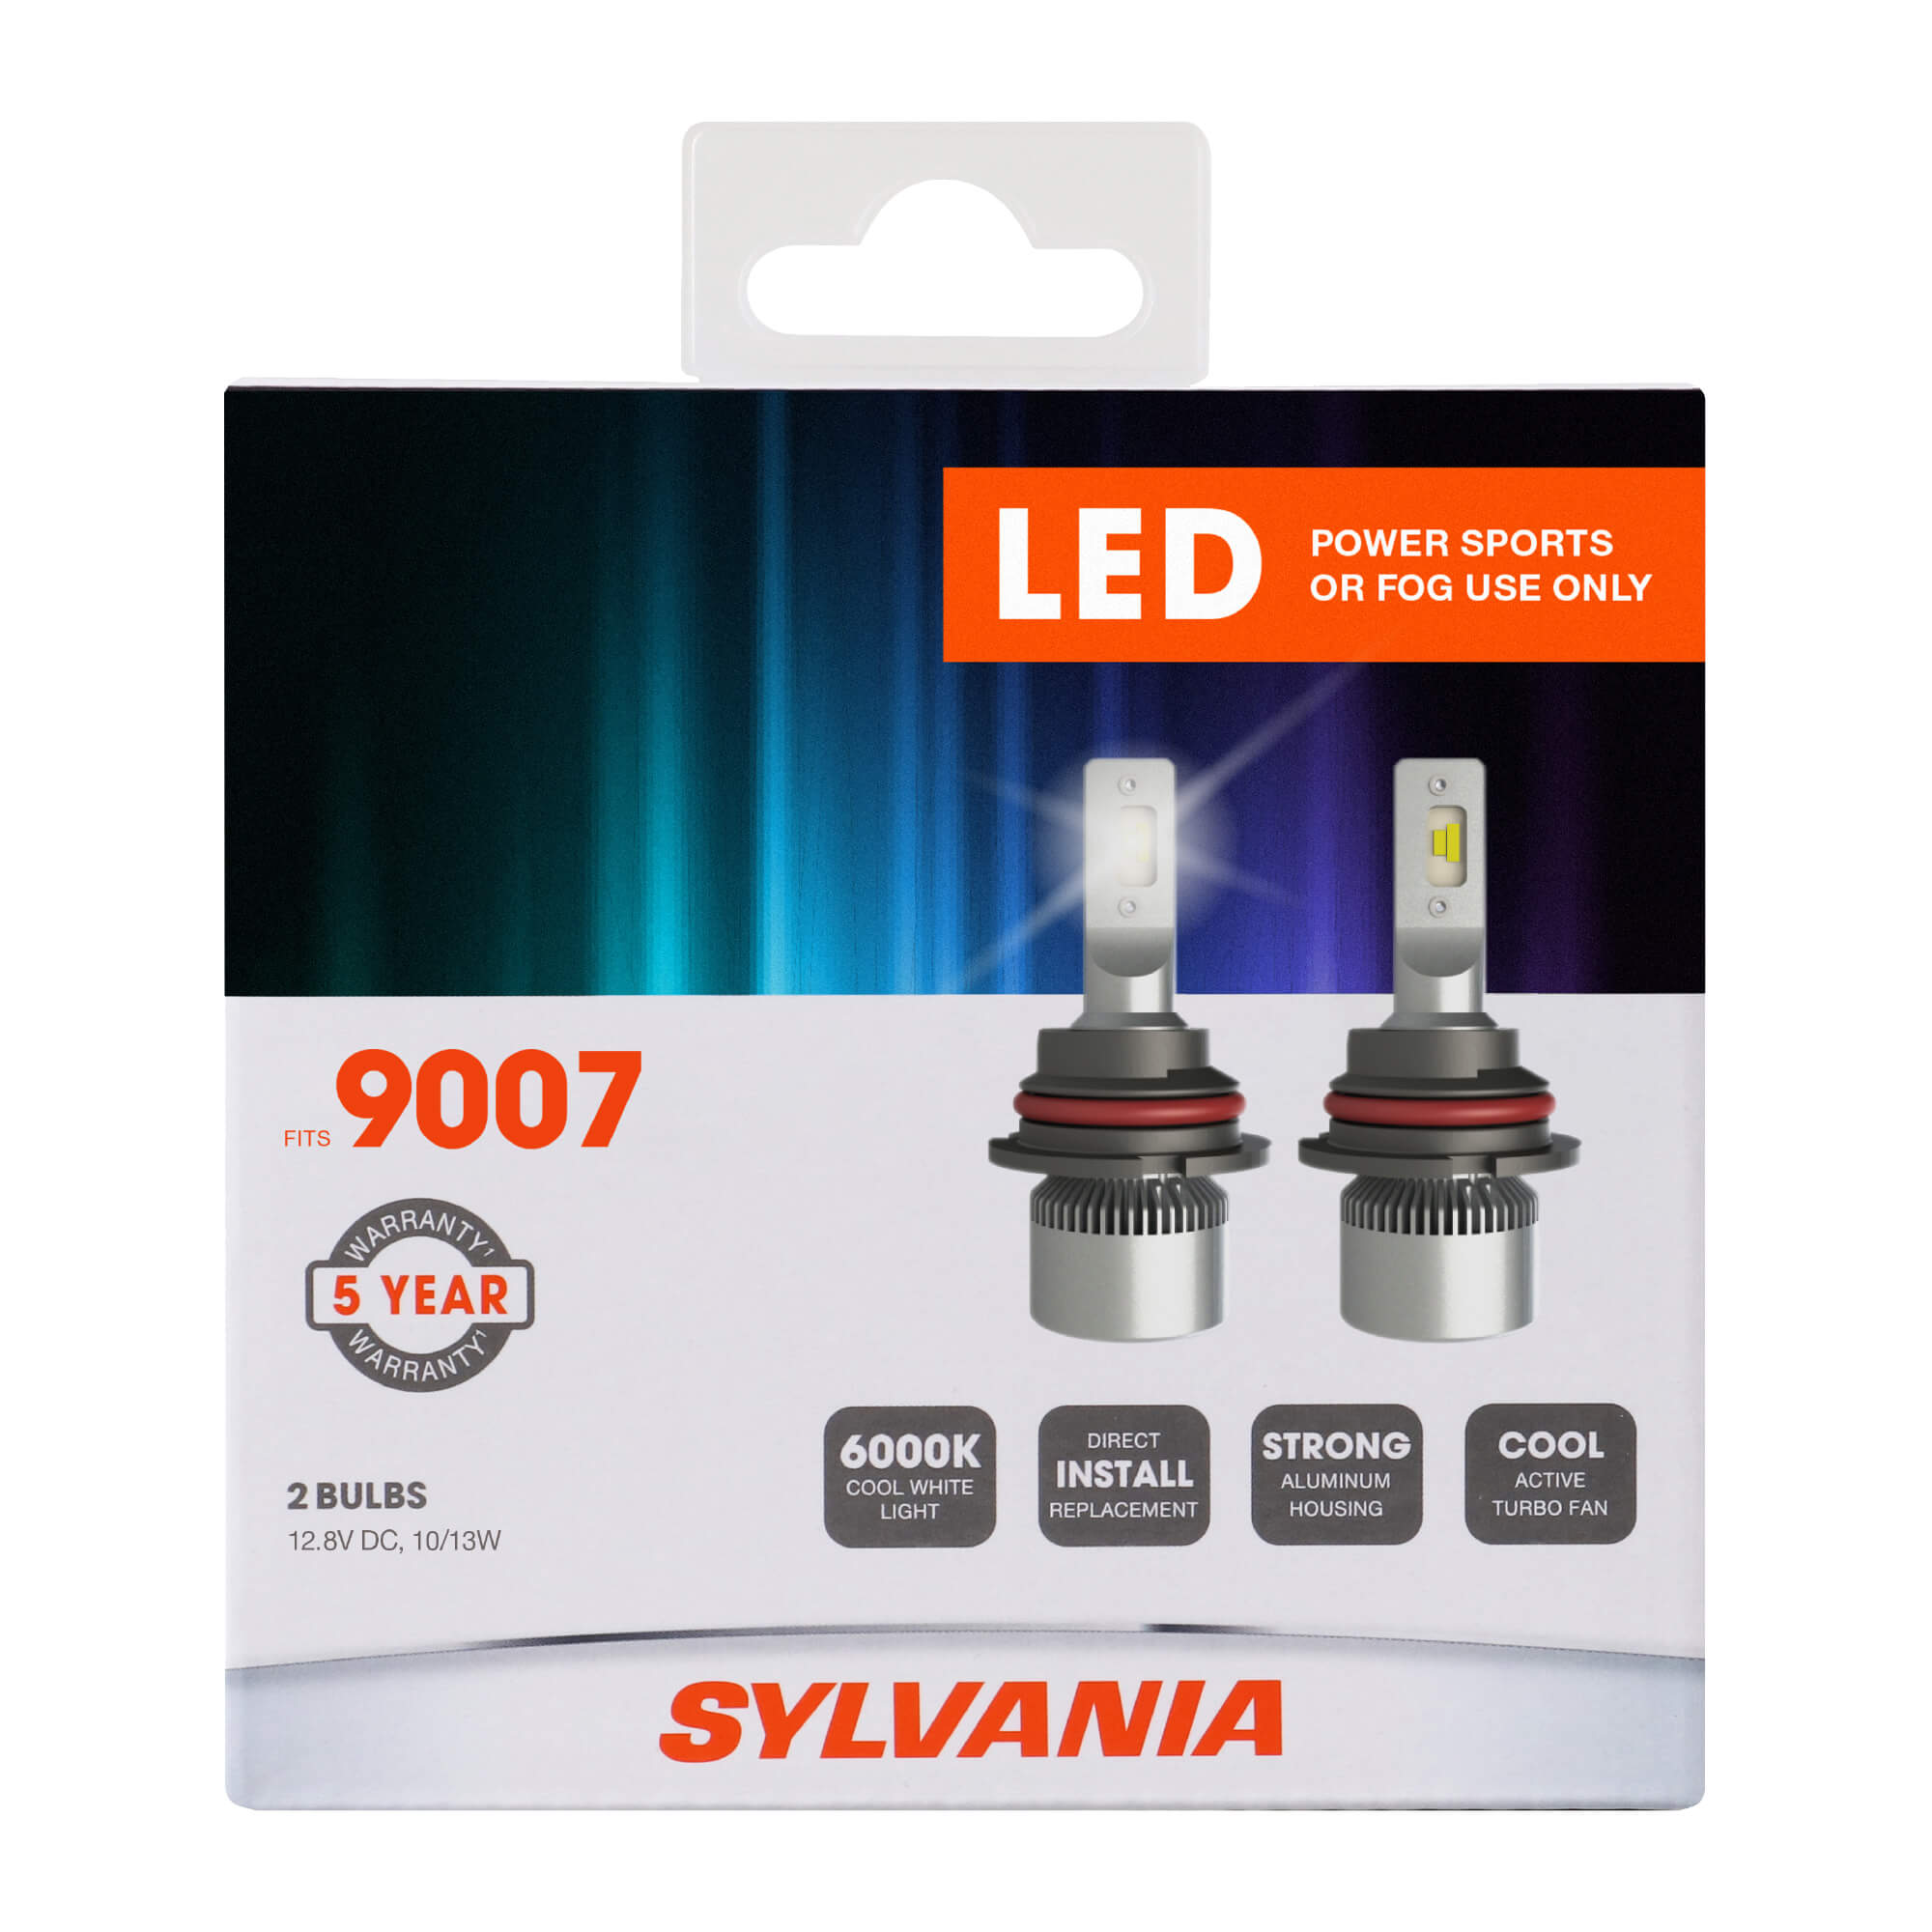 SYLVANIA 9007 LED Fog & Powersports Bulb, 2